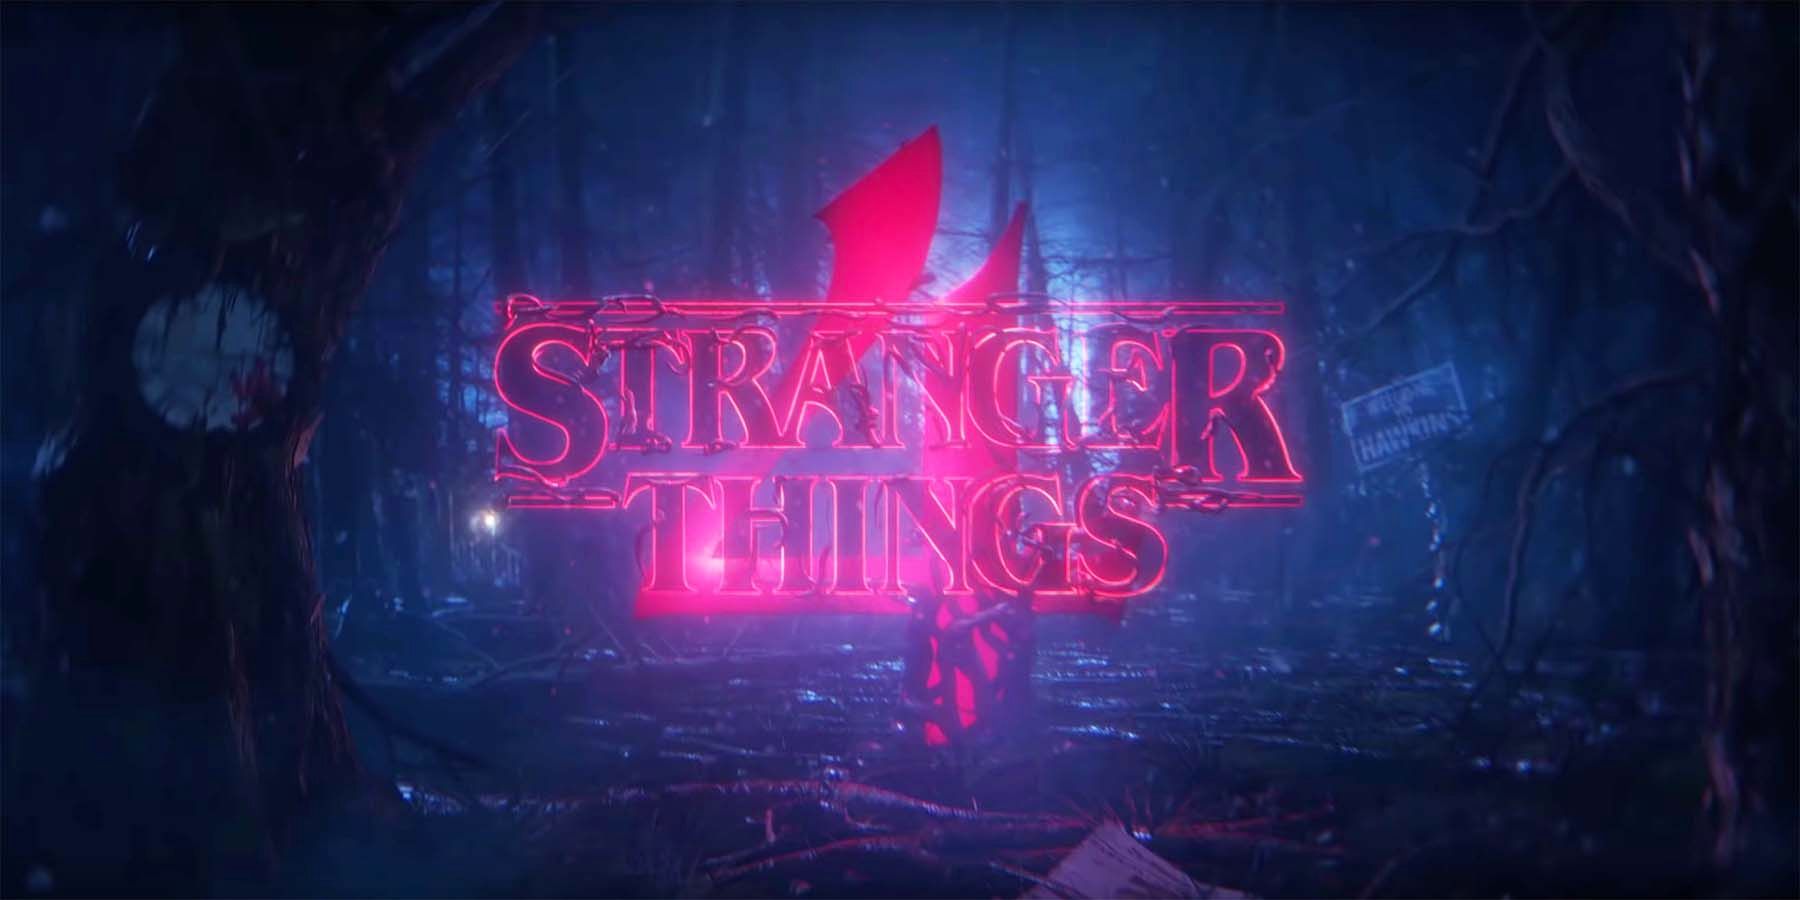 Stranger Things 4 announcement video